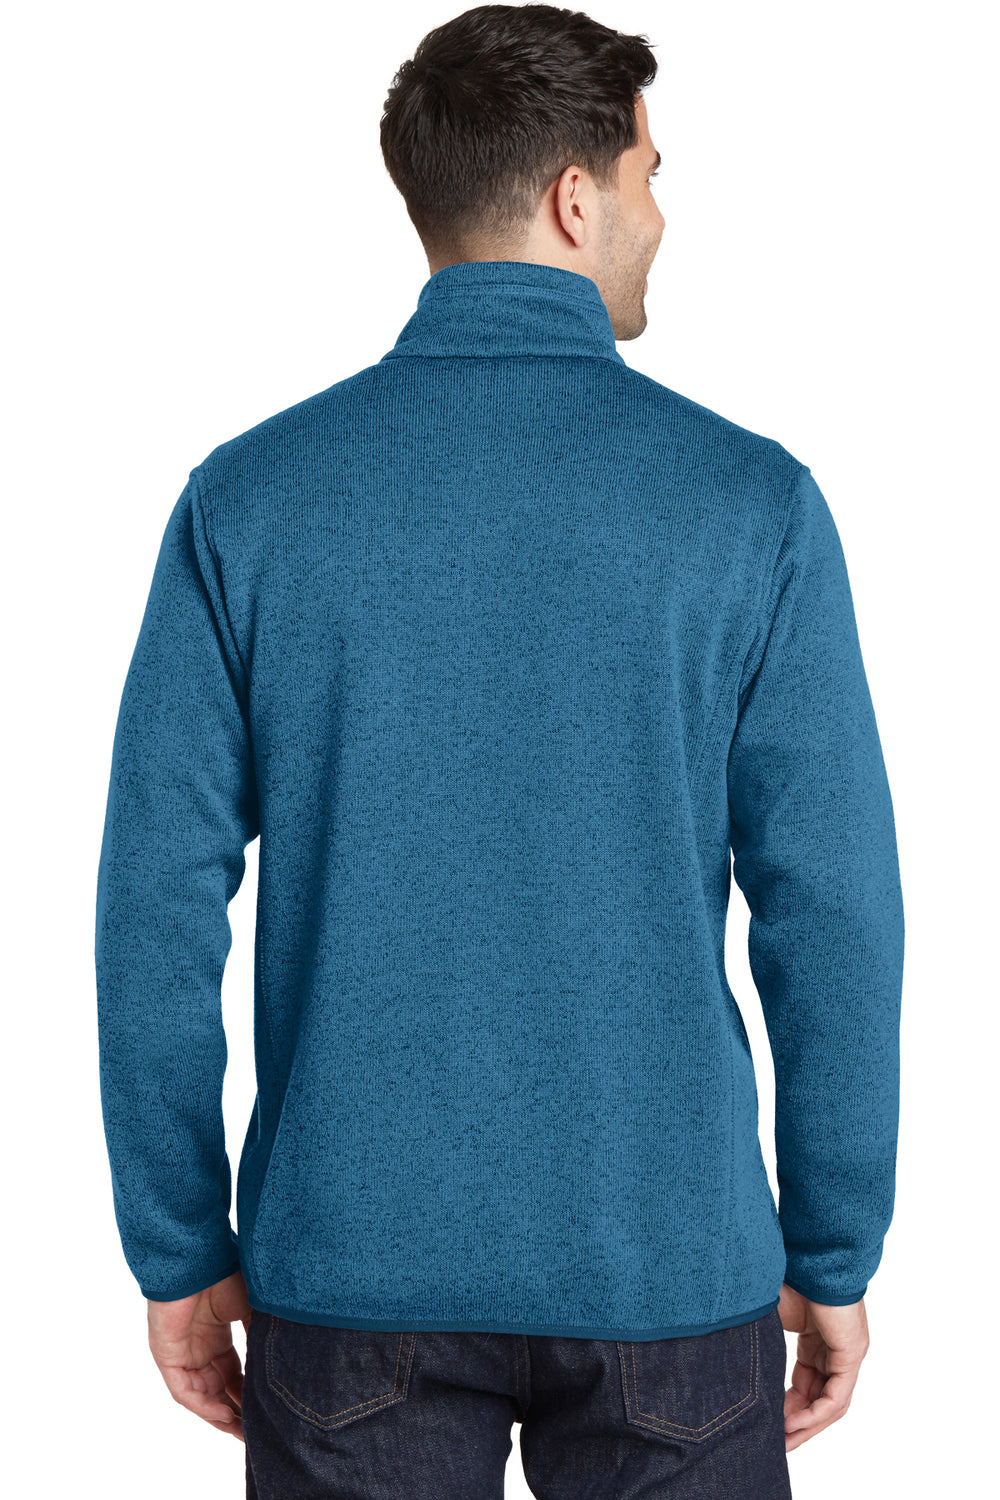 Port Authority F232 Mens Full Zip Sweater Fleece Jacket Heather Medium Blue Back